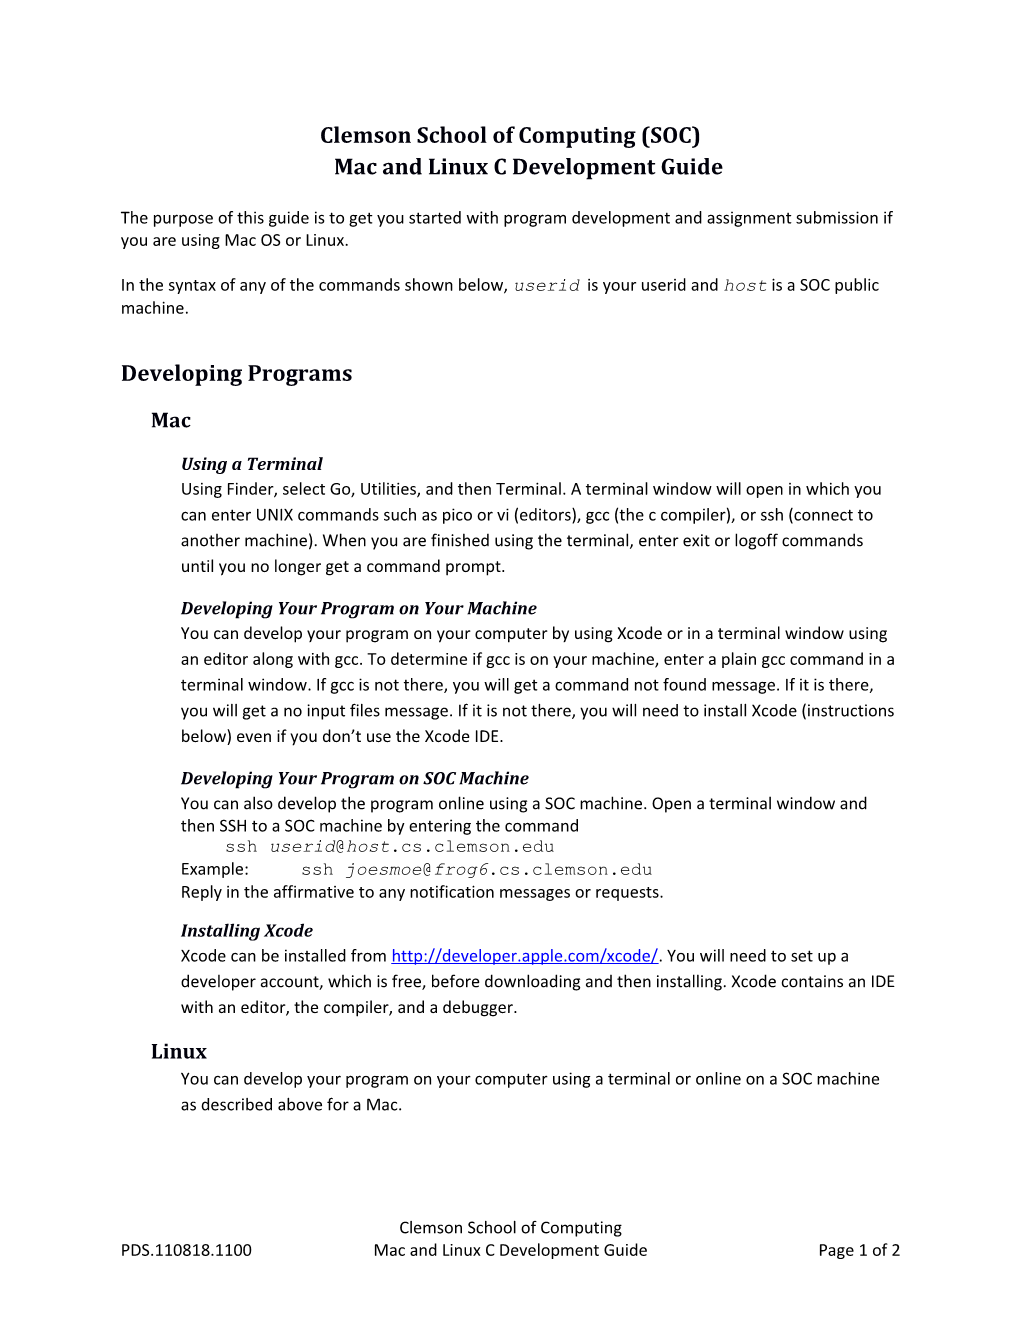 Clemson School of Computing (SOC)Mac and Linux C Development Guide